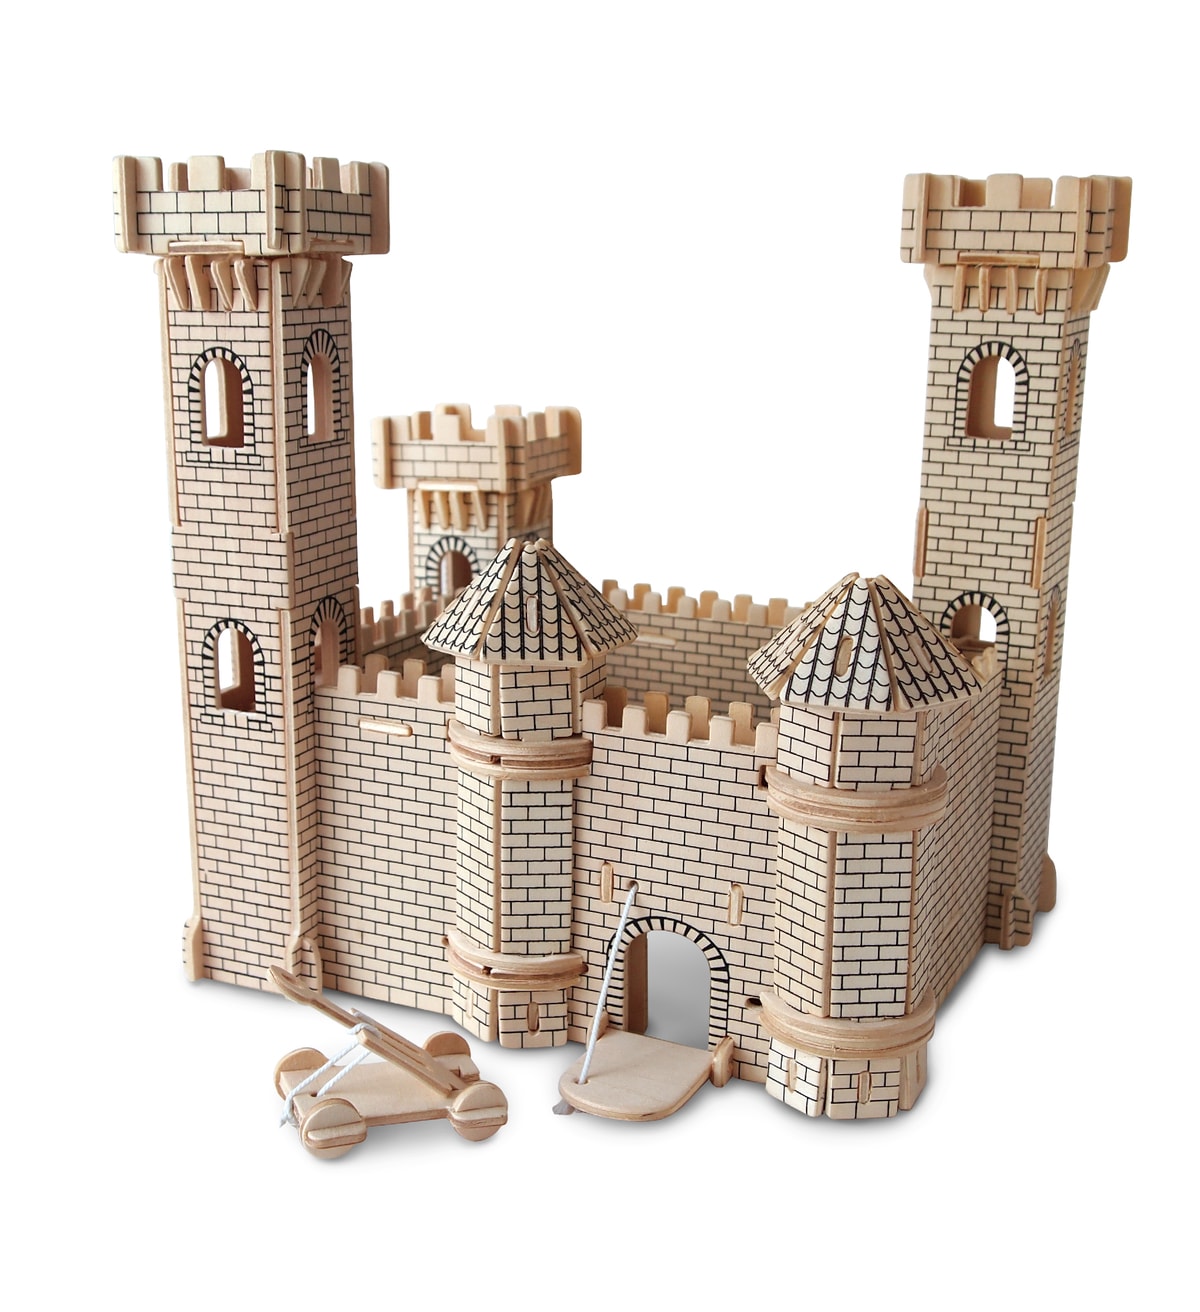 CubicFun 3D Puzzle MC232 Castle of Hohenzollern,Building/Castle Jigsaws,DIY Toys